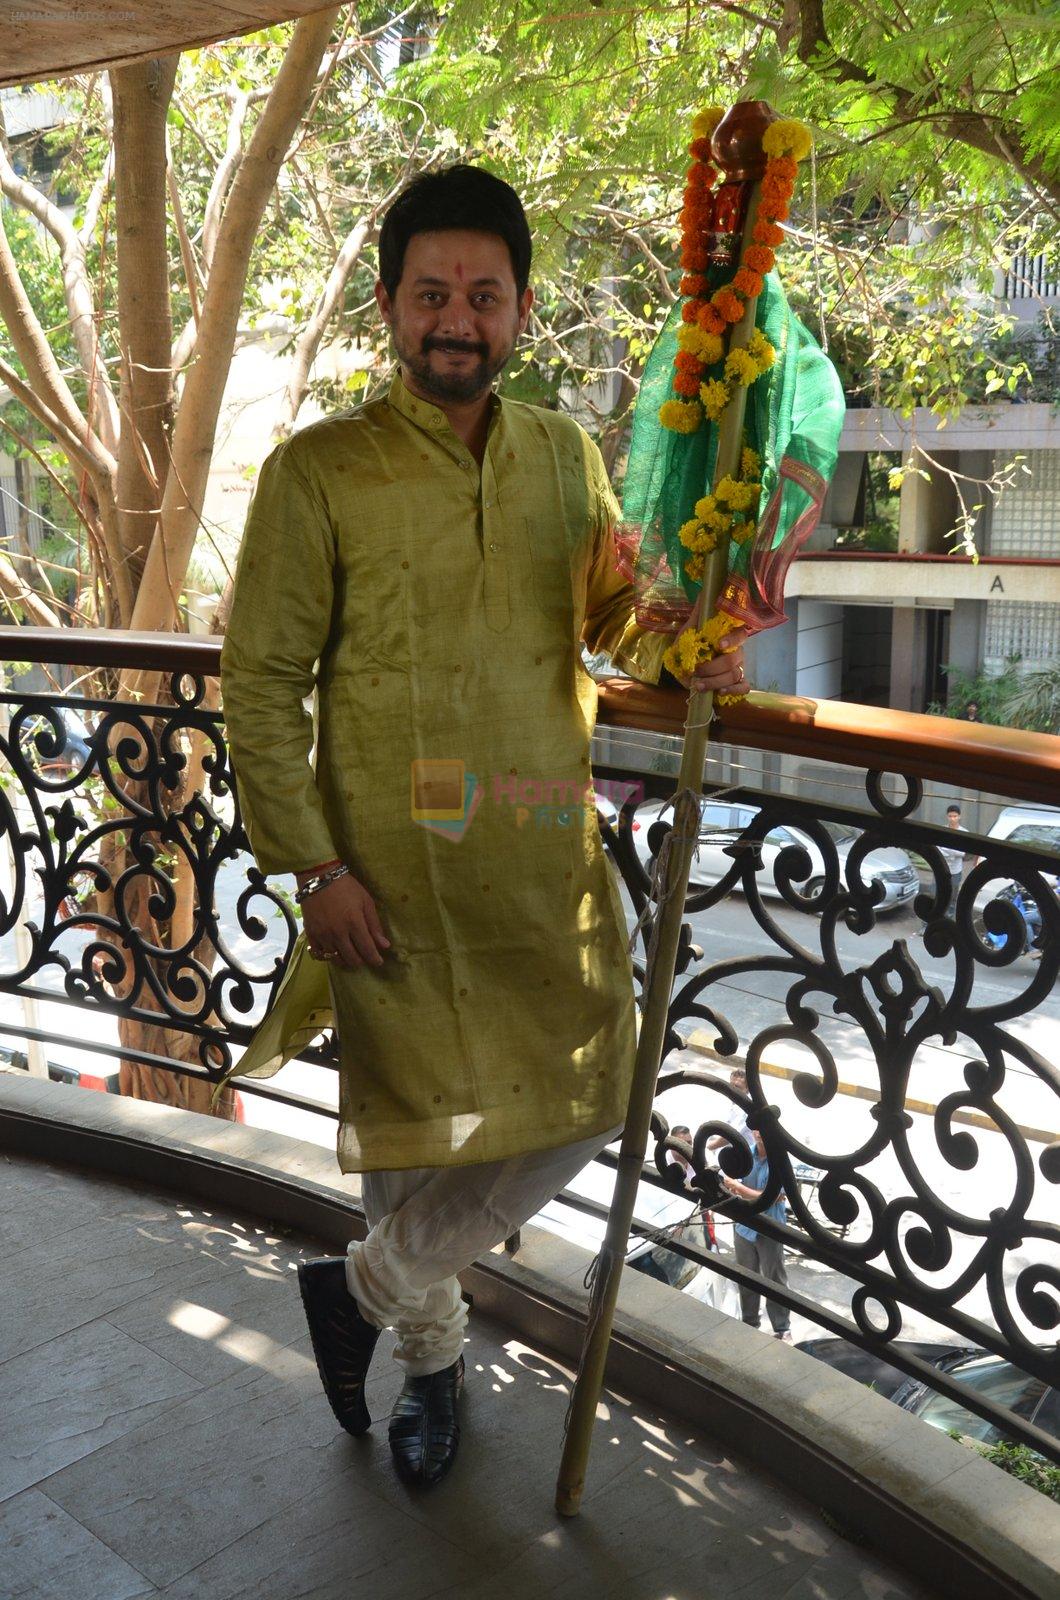 Swapnil Joshi at Gudi Padwa photo shoot on 7th April 2016